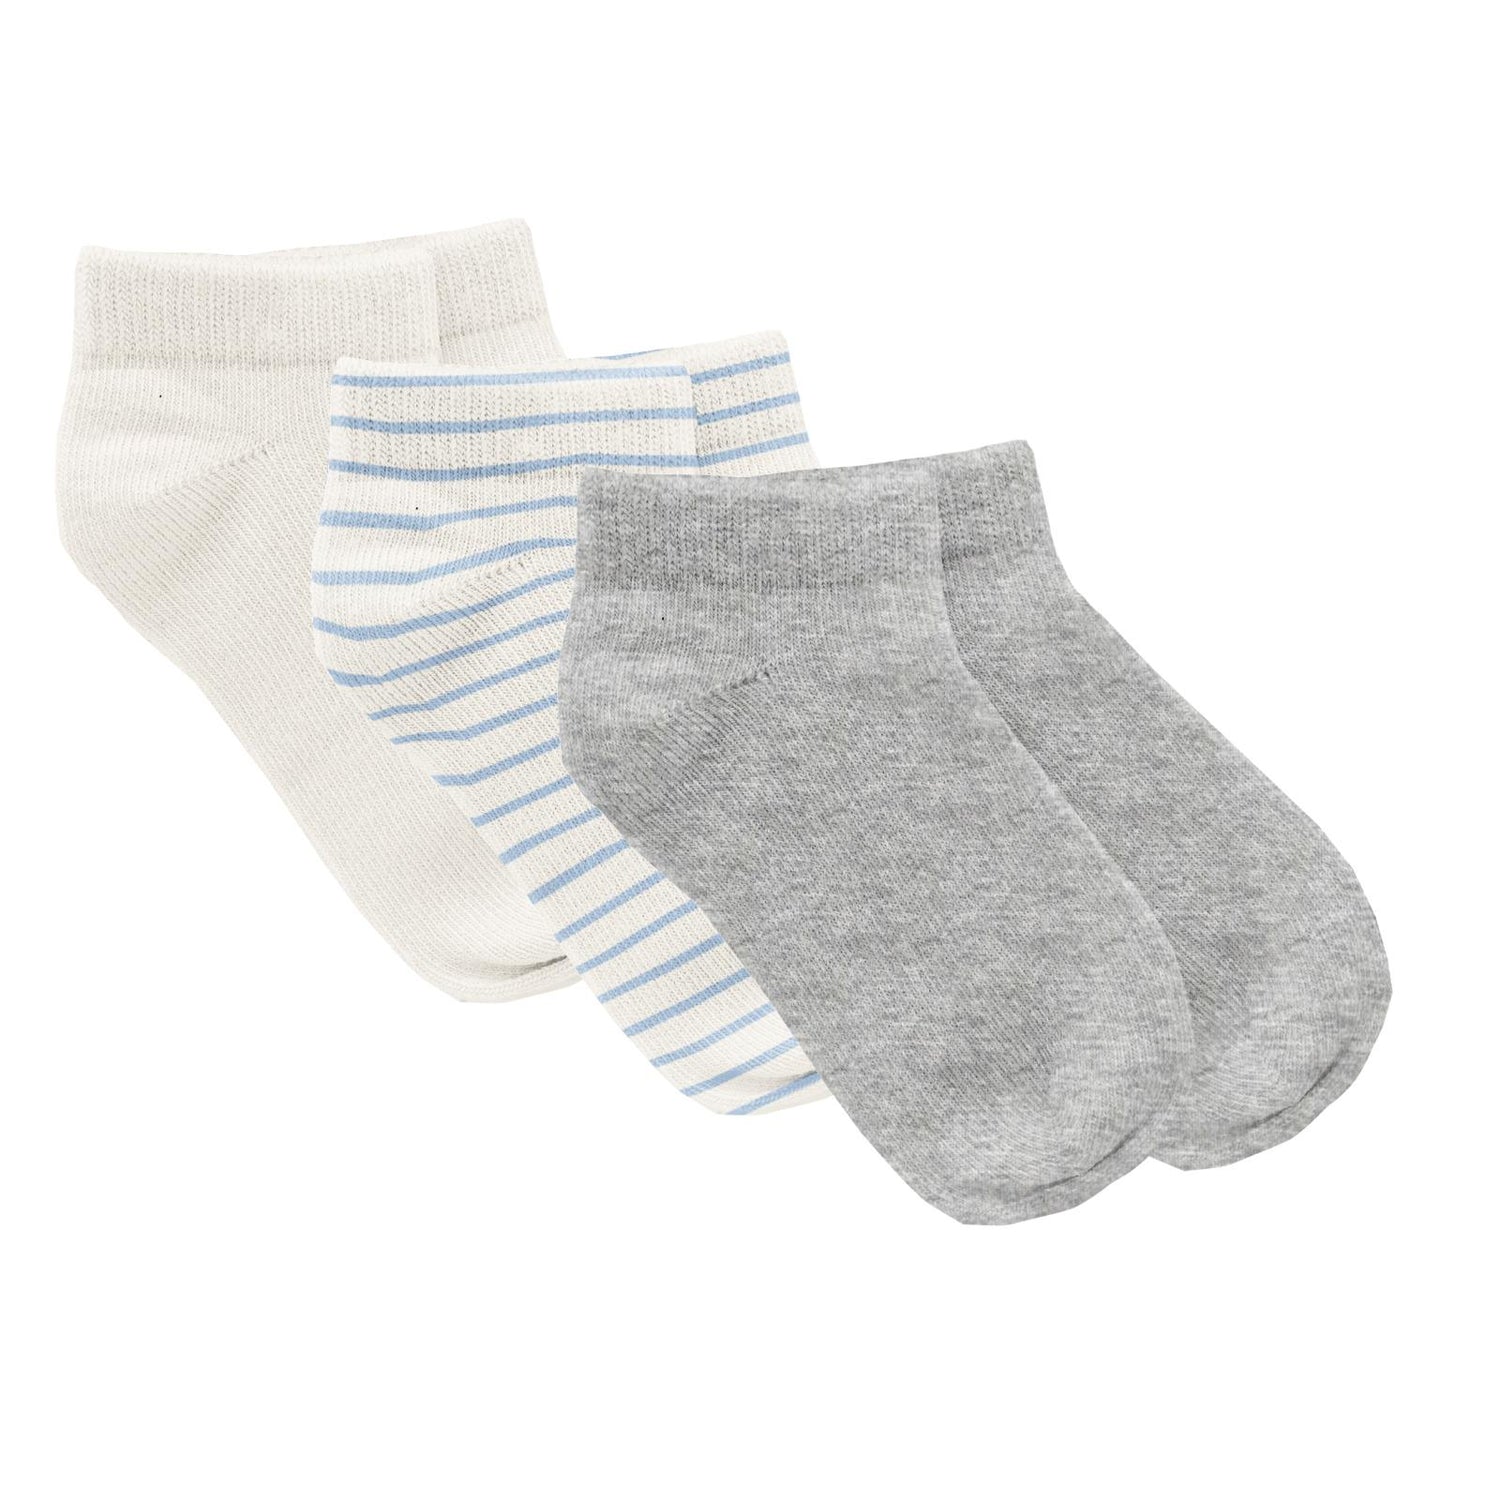 Print Ankle Socks Set of 3 in Heathered Mist, Pond Sweet Stripe & Natural